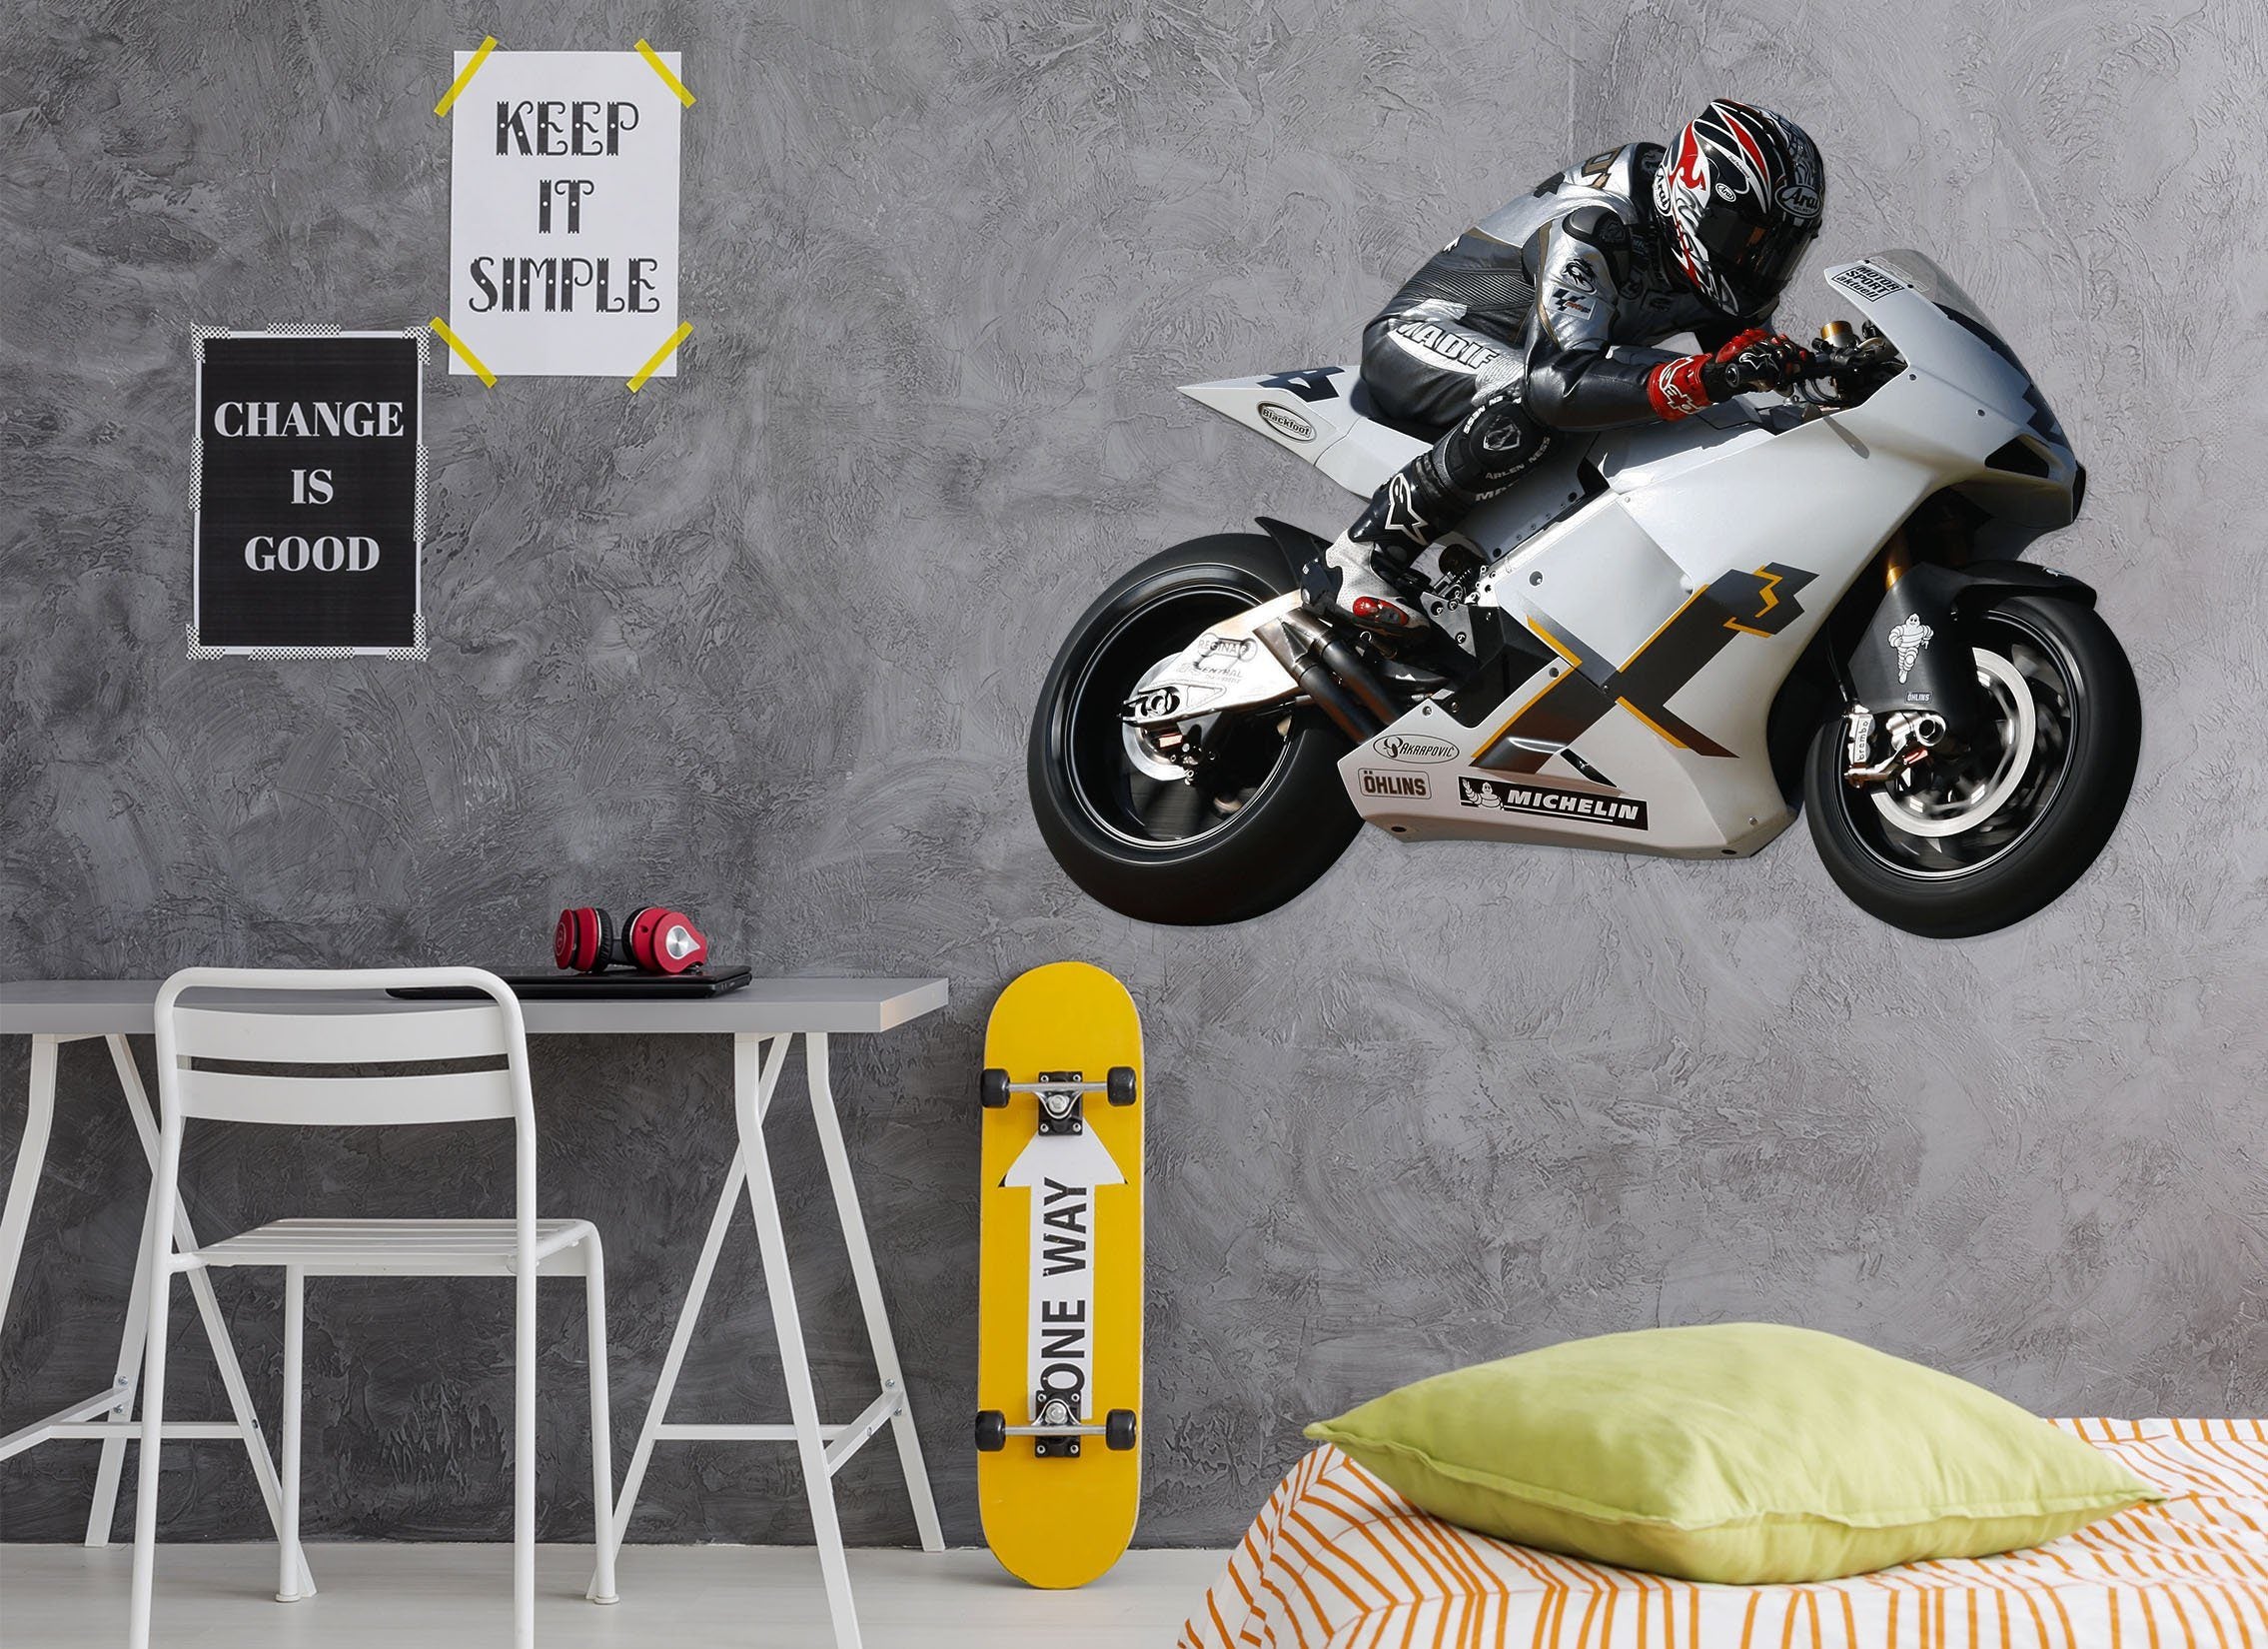 3D Motorcycle Racing 185 Vehicles Wallpaper AJ Wallpaper 